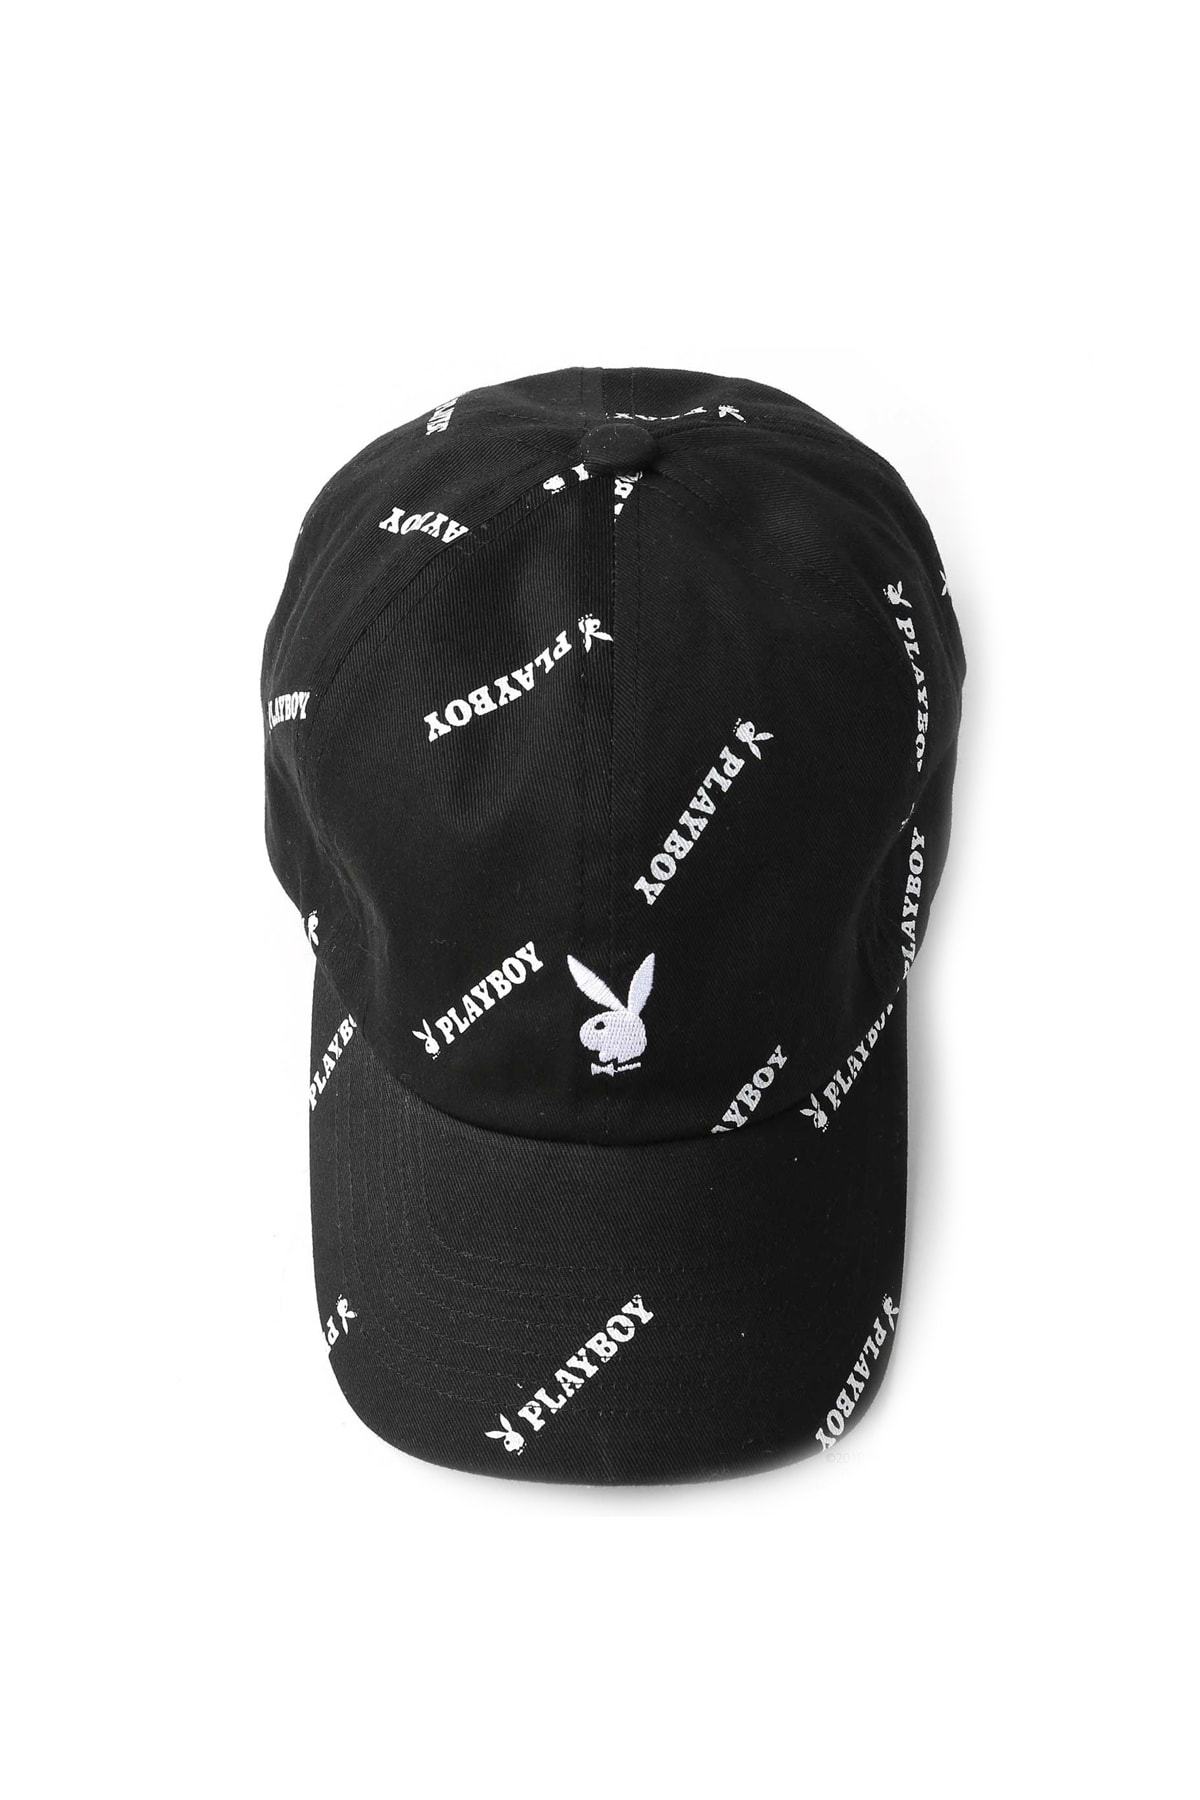 Playboy FREAK'S STORE Capsule Collection T Shirt Cap Hat